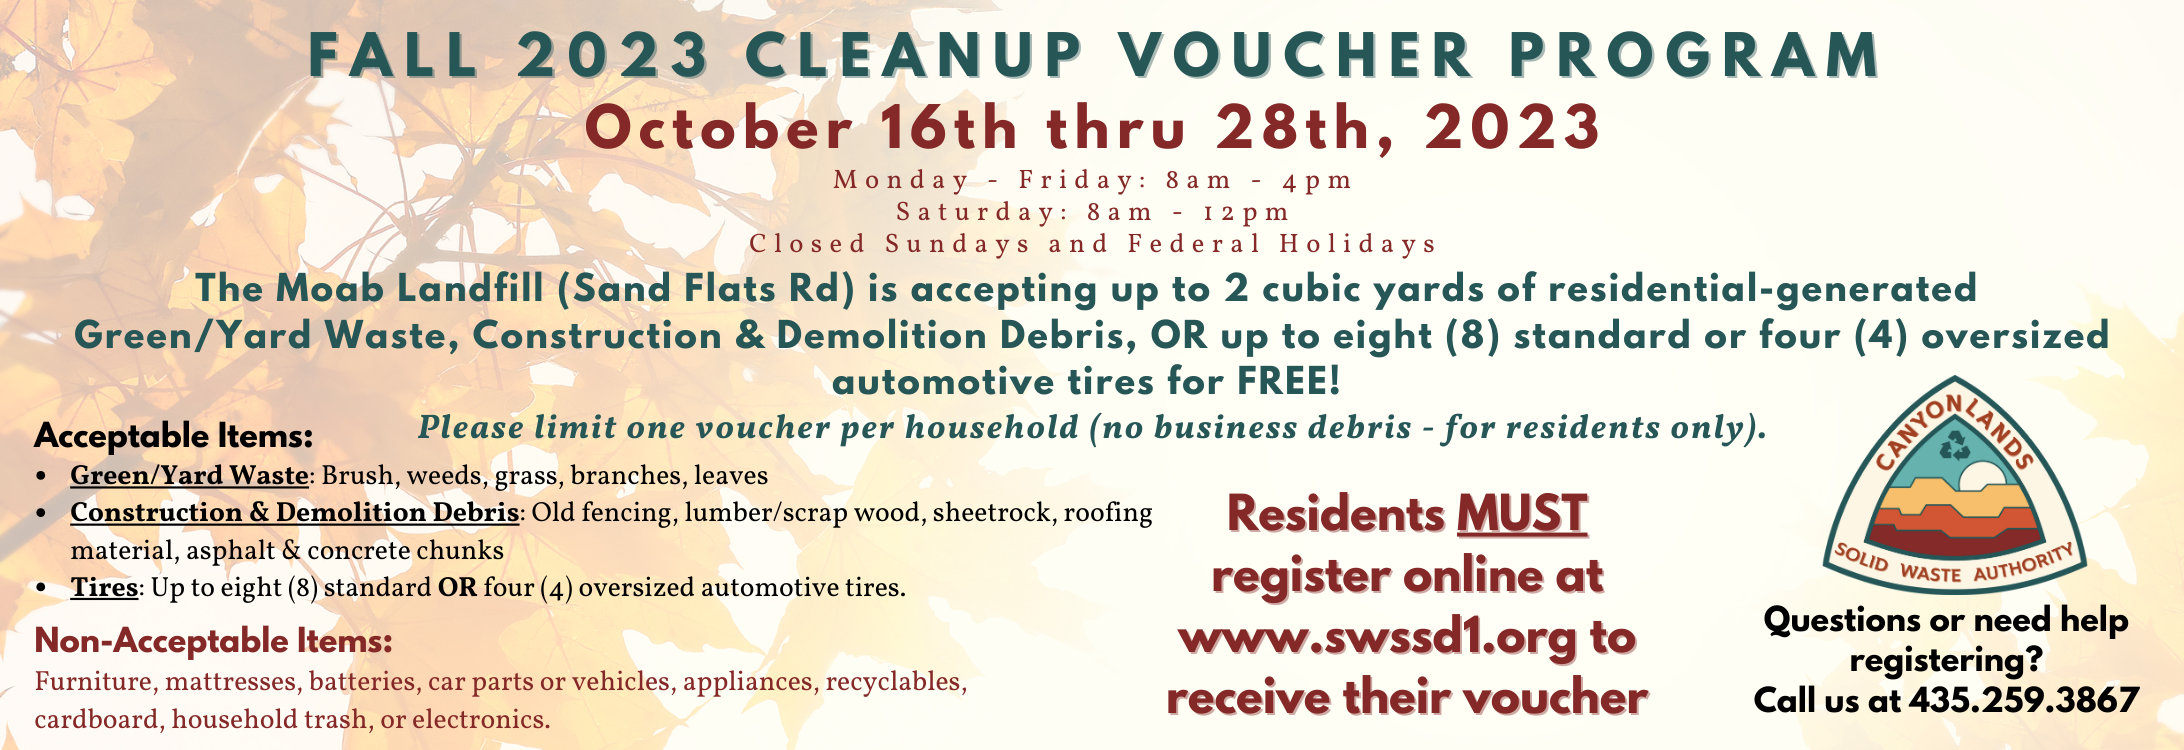 Fall 2023 Voucher Cleanup Program Flyer